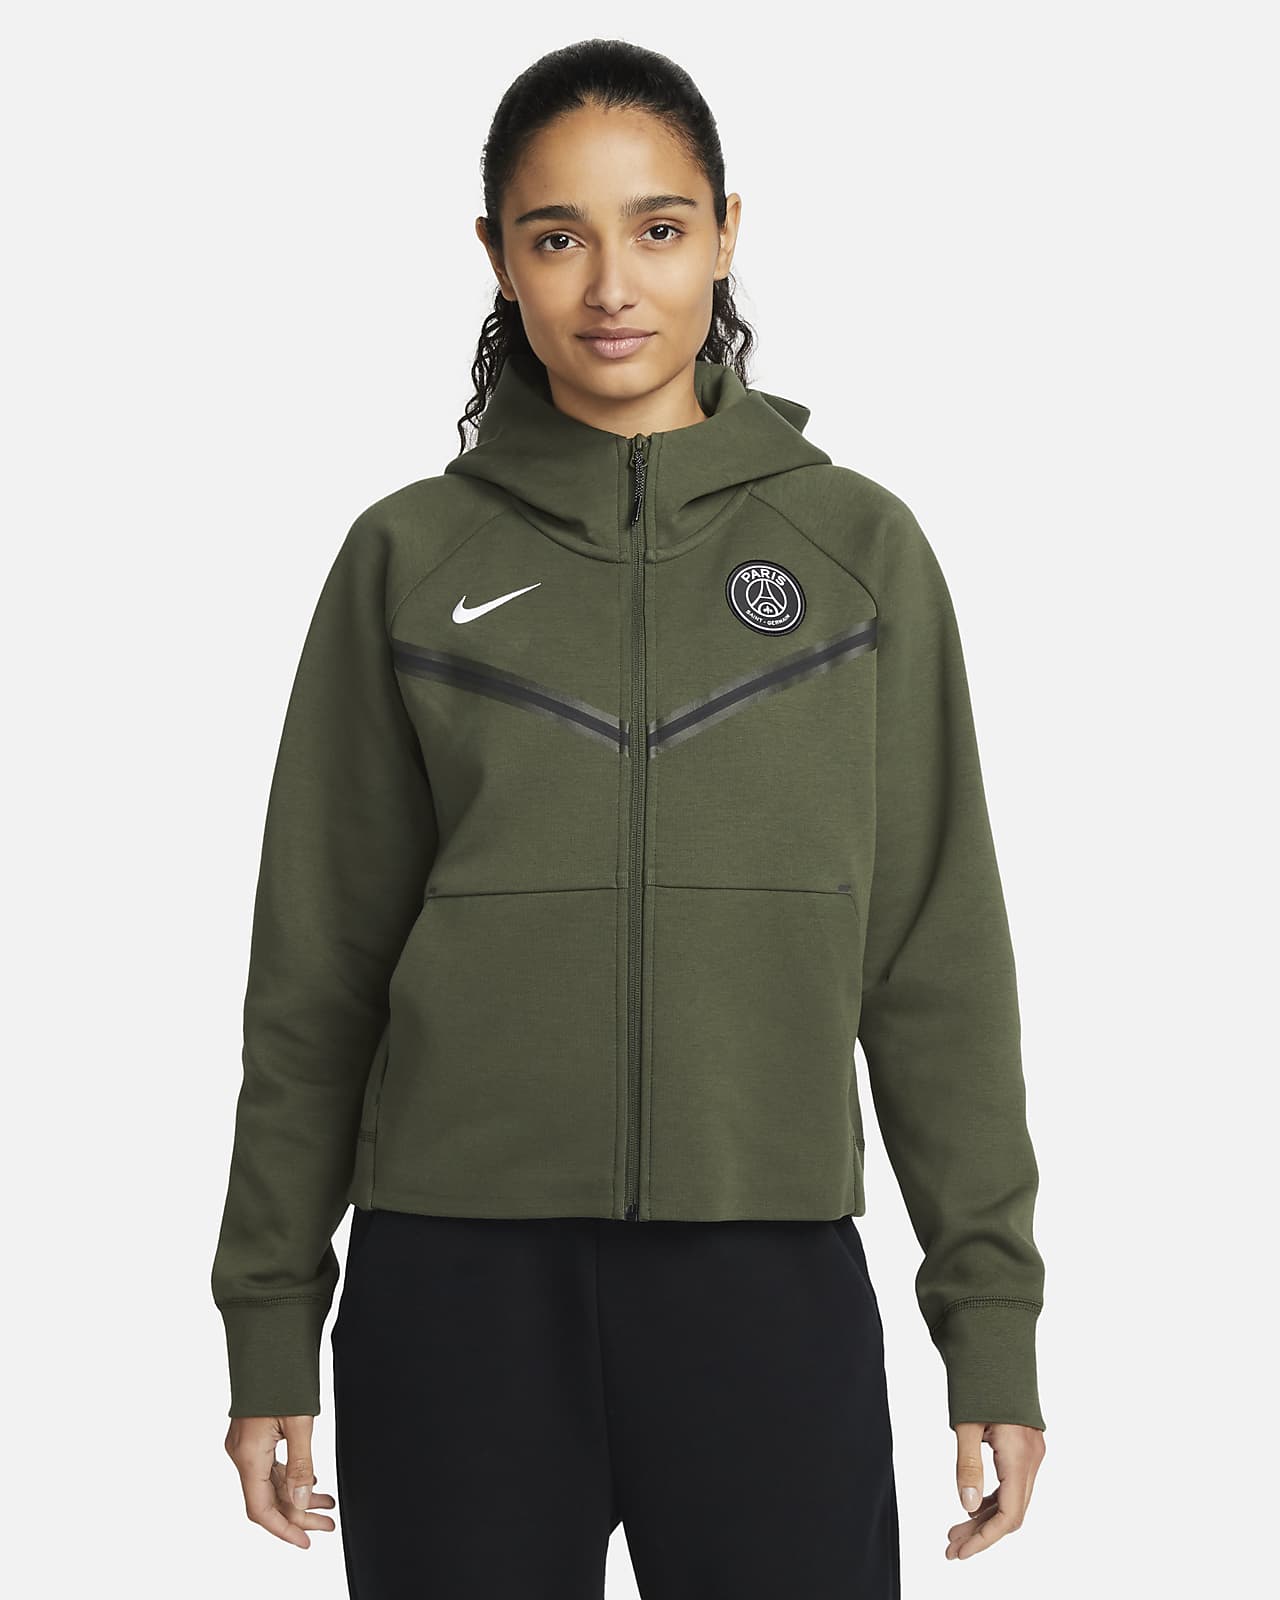 Saint-Germain Tech Fleece Windrunner con capucha y cremallera completa - Mujer. Nike ES